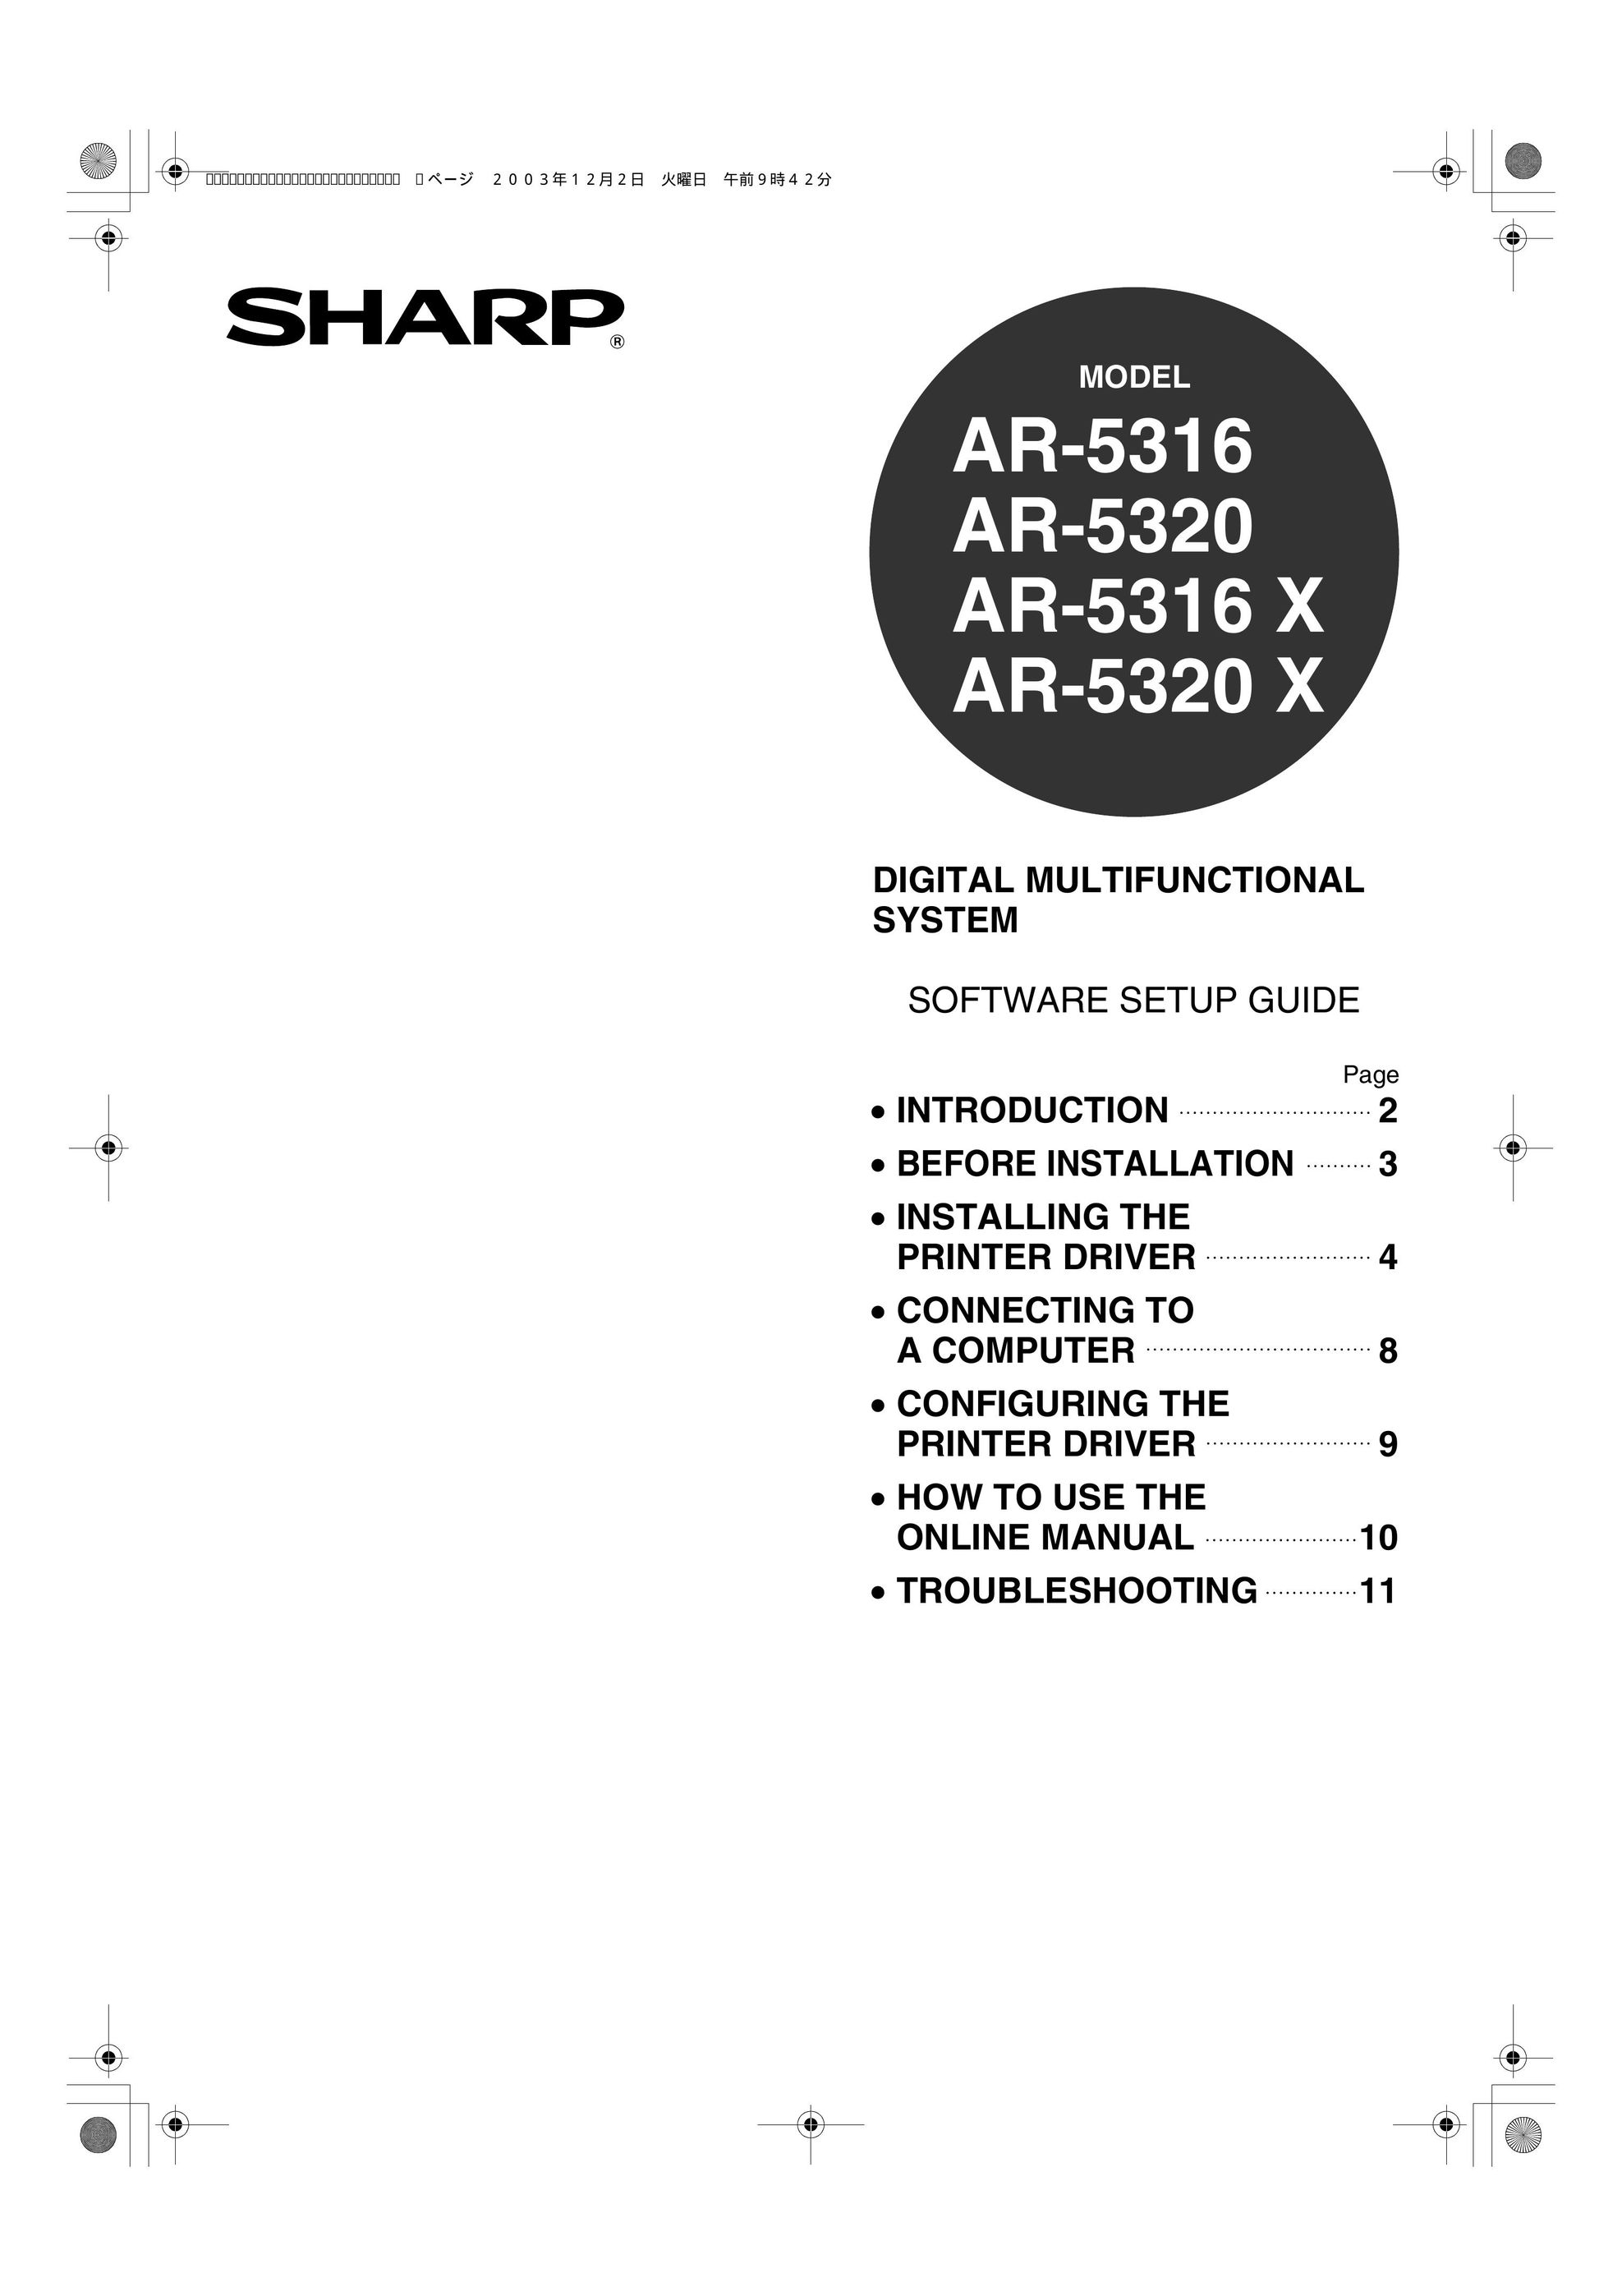 Sharp AR-5320 X Copier User Manual